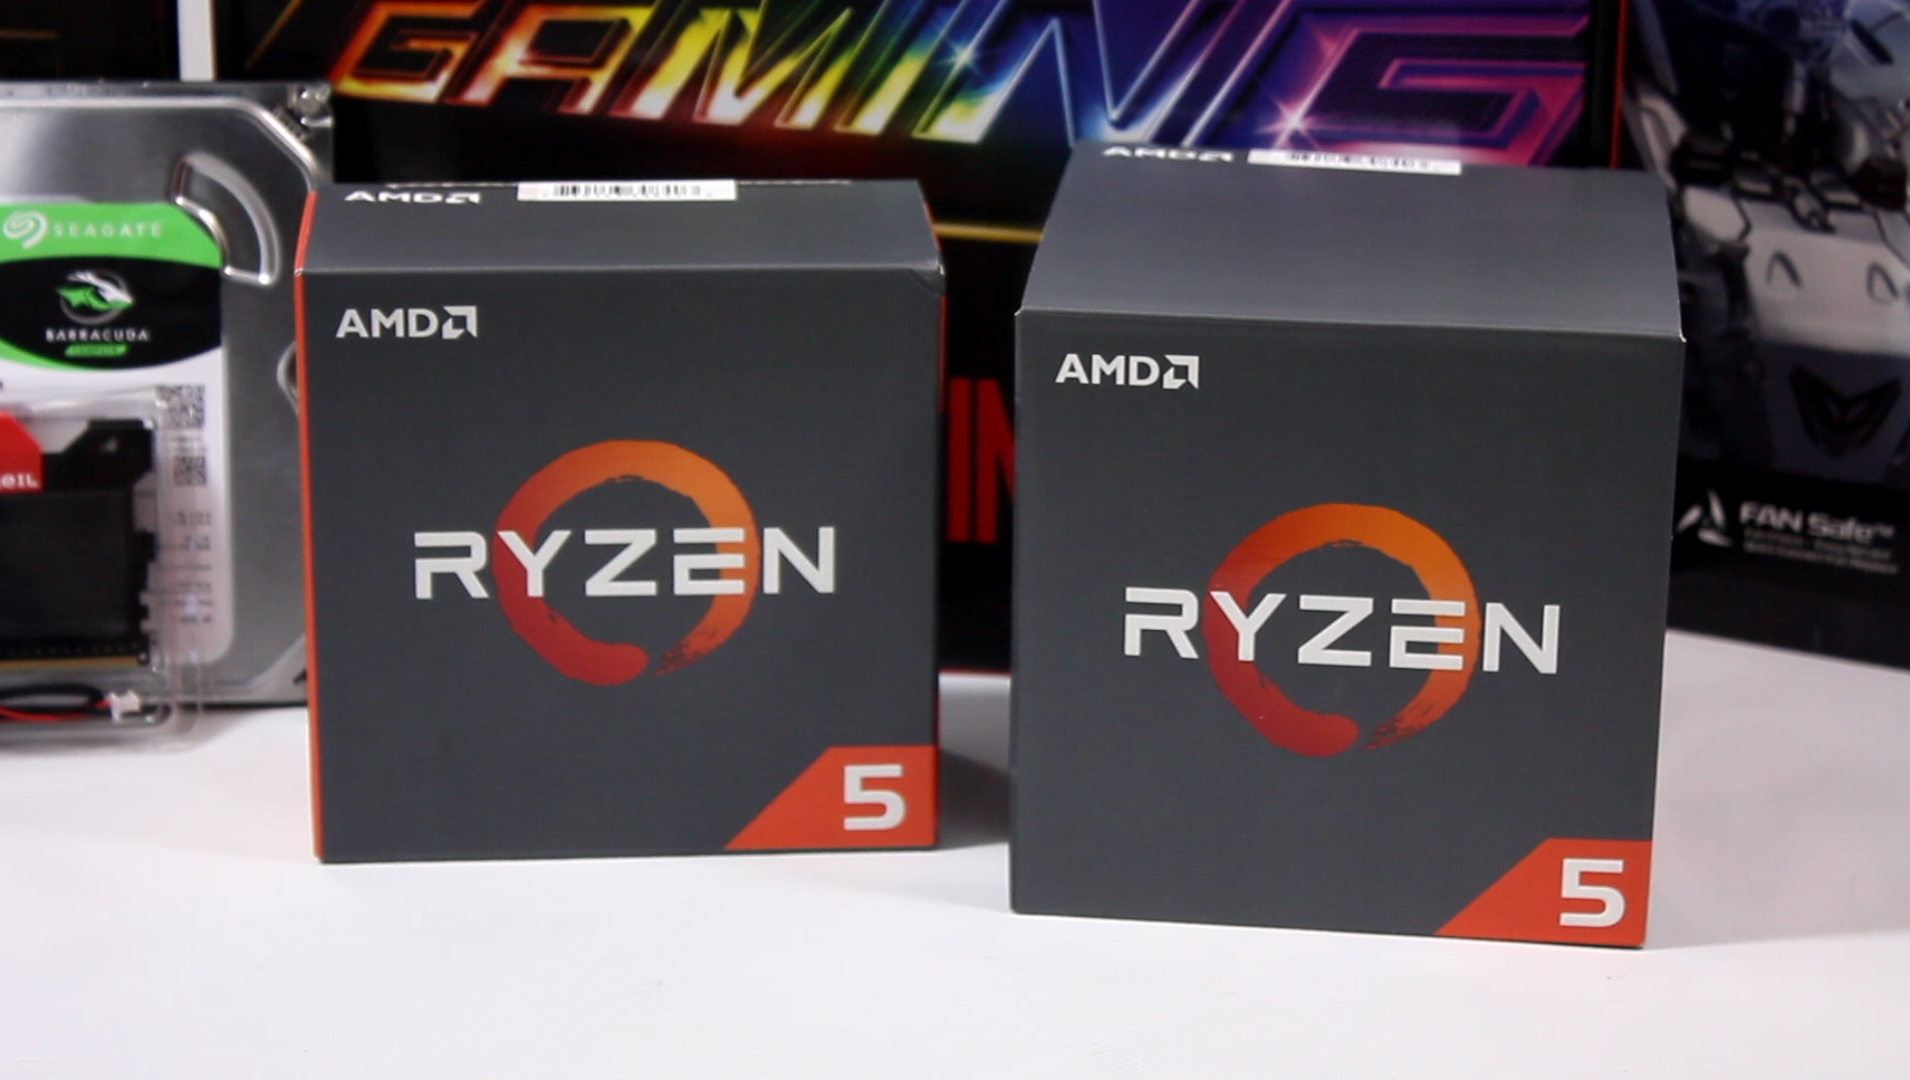 AMD Ryzen5 1500x vs Ryzen5 1600x